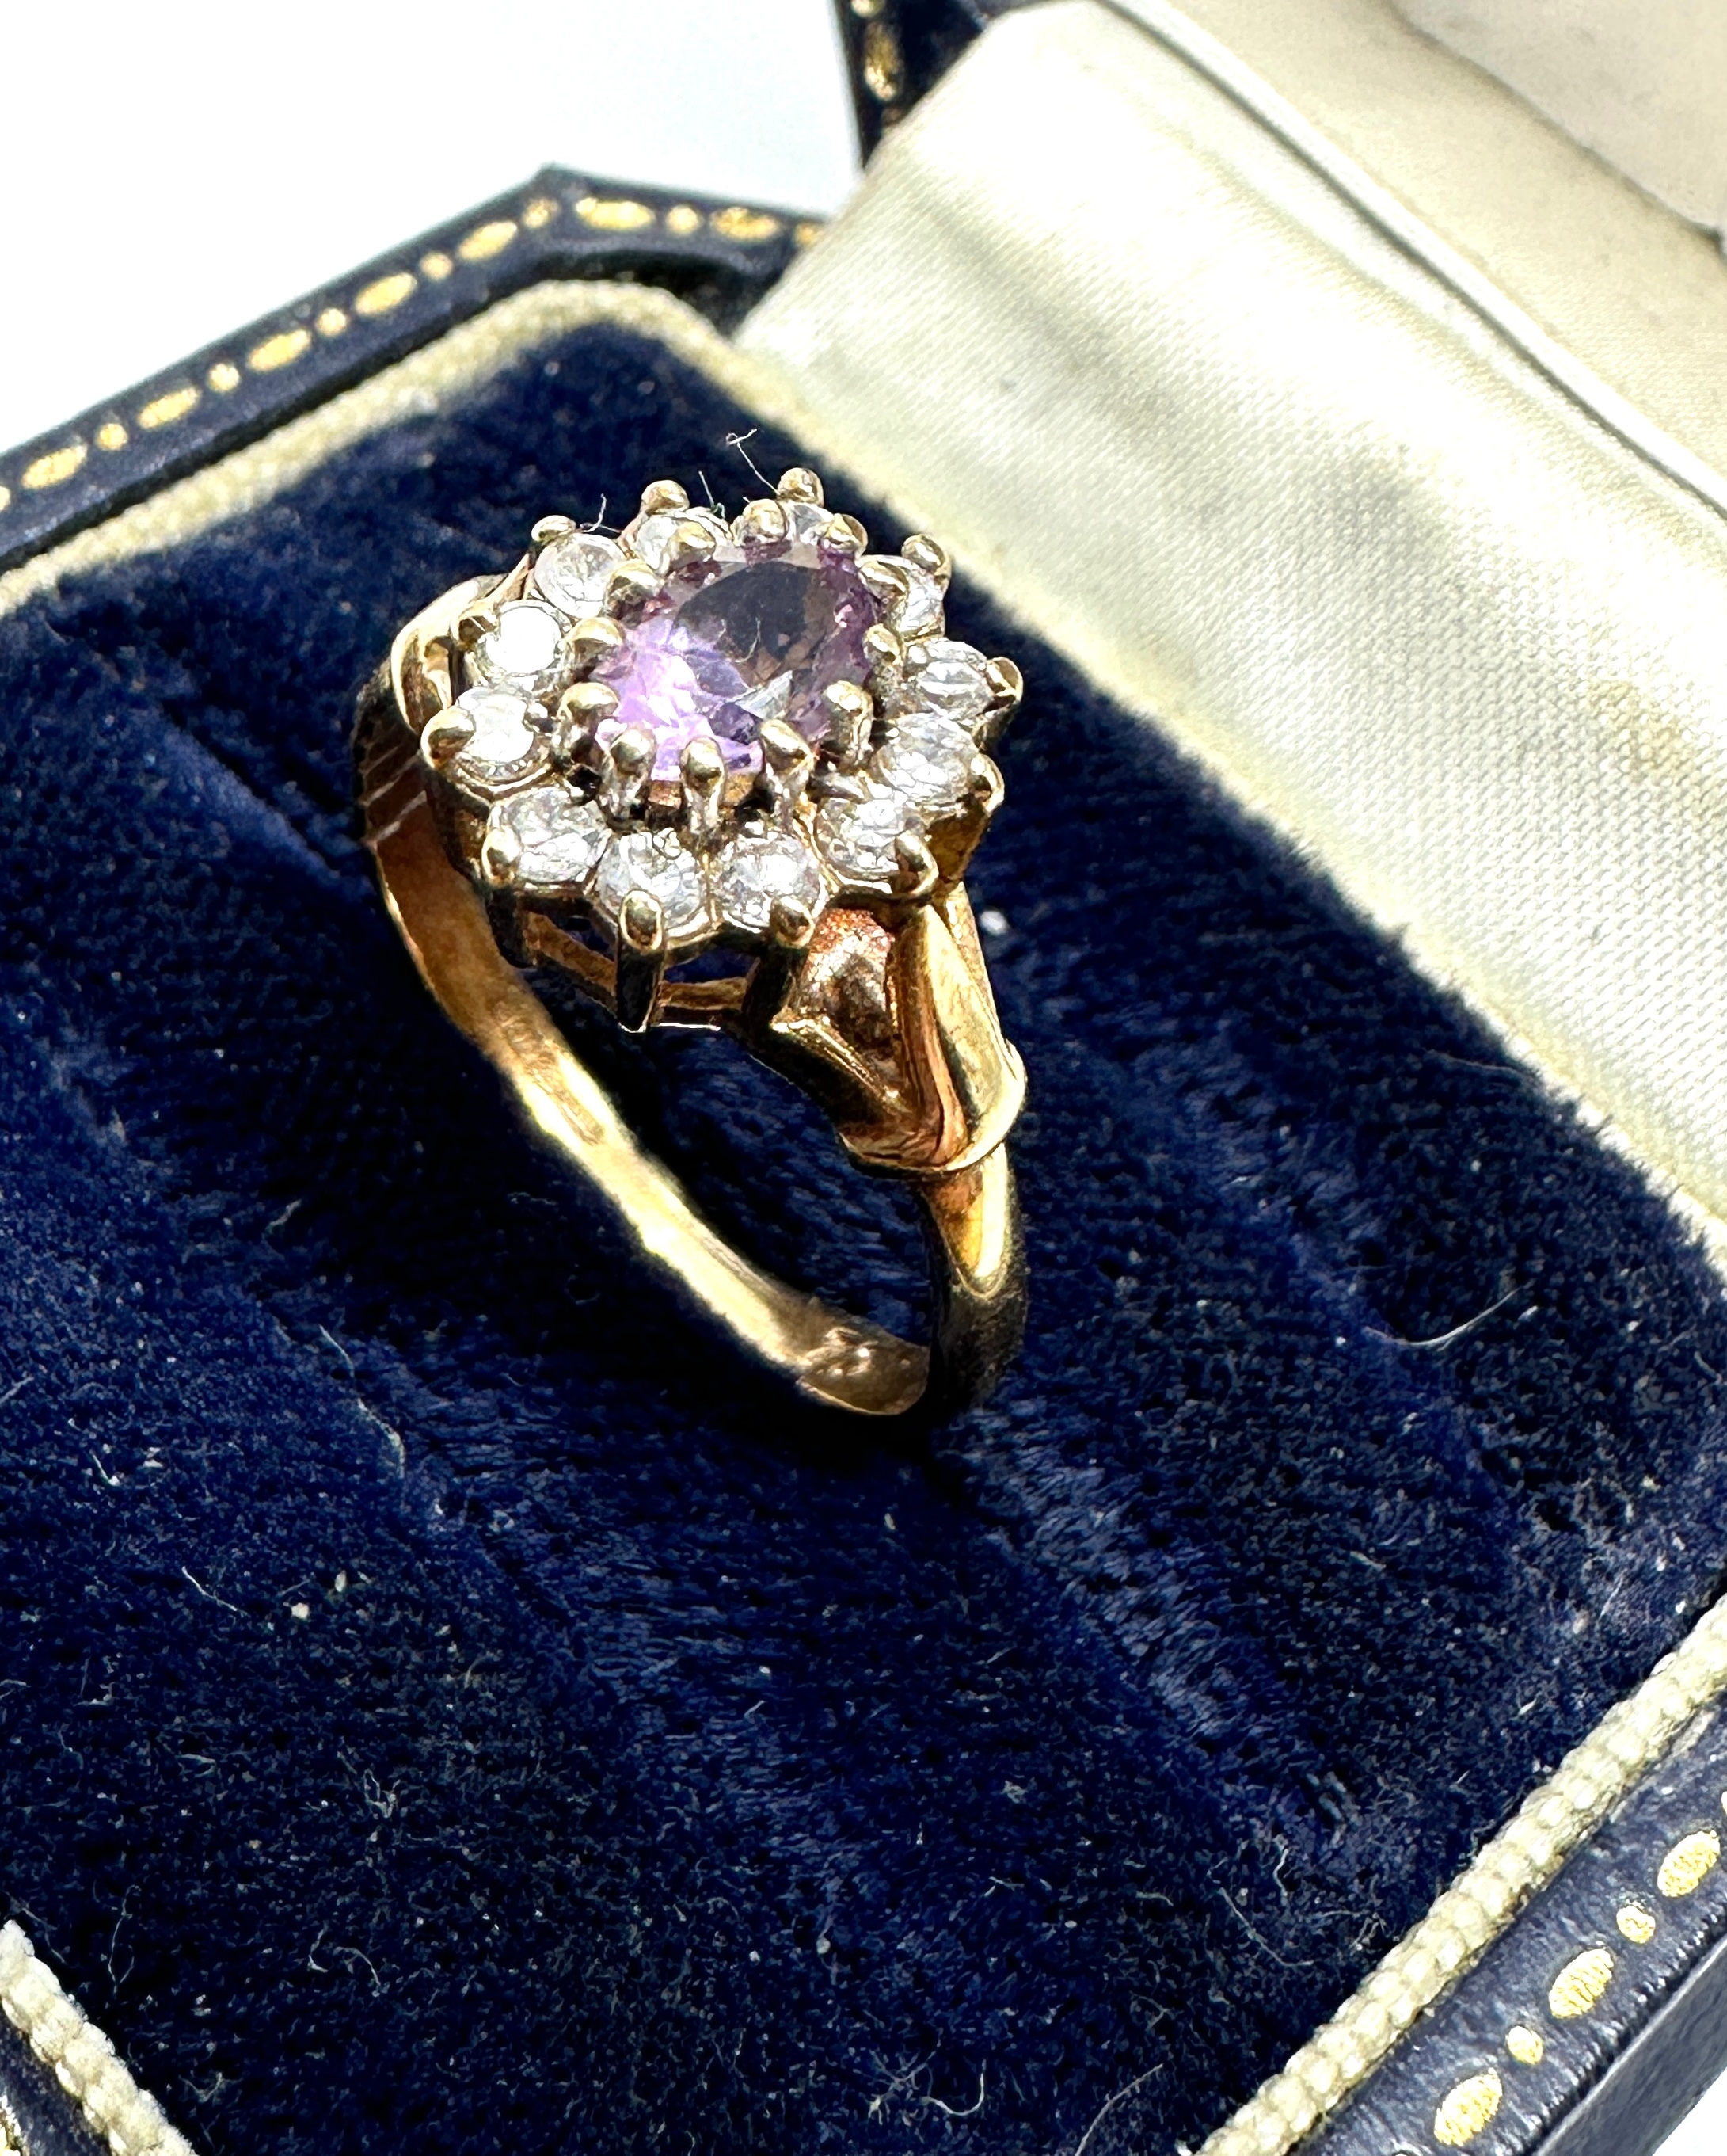 9ct gold amethyst & white gemstone ring weight 2.4g - Image 2 of 4